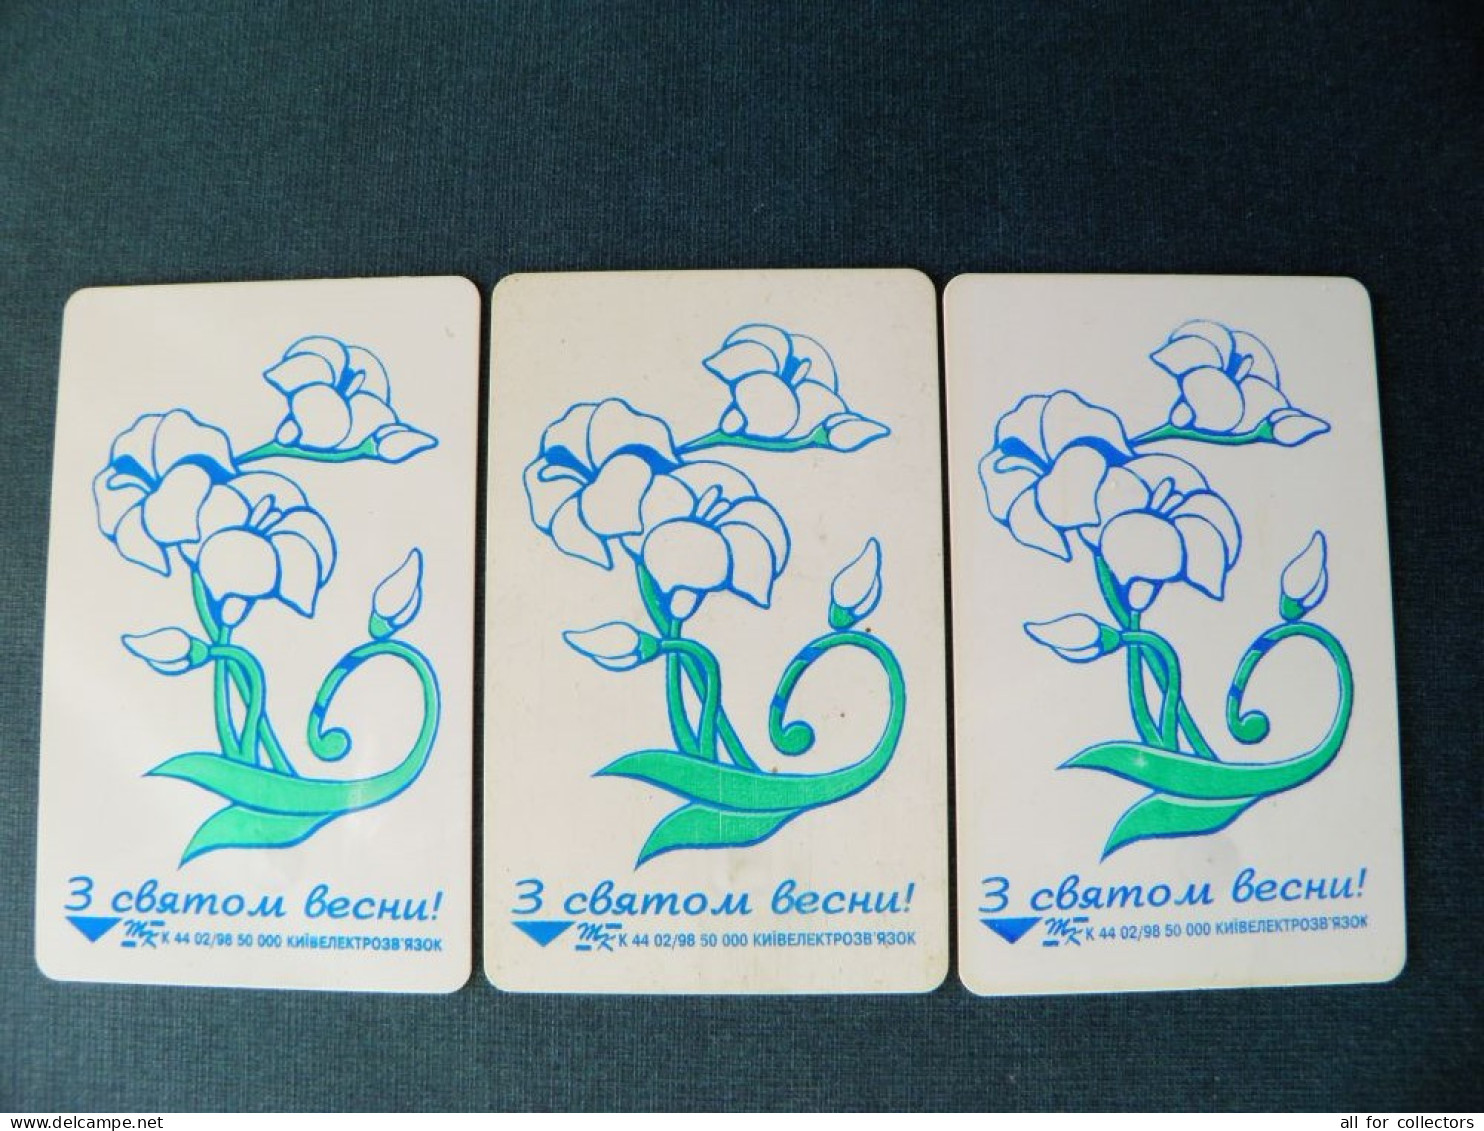 3 Different Cards Phonecard Chip Flowers Spring  K44 02/98 30,000ex. 1680 Units Prefix Nr. BV EZh GD UKRAINE - Ucrania